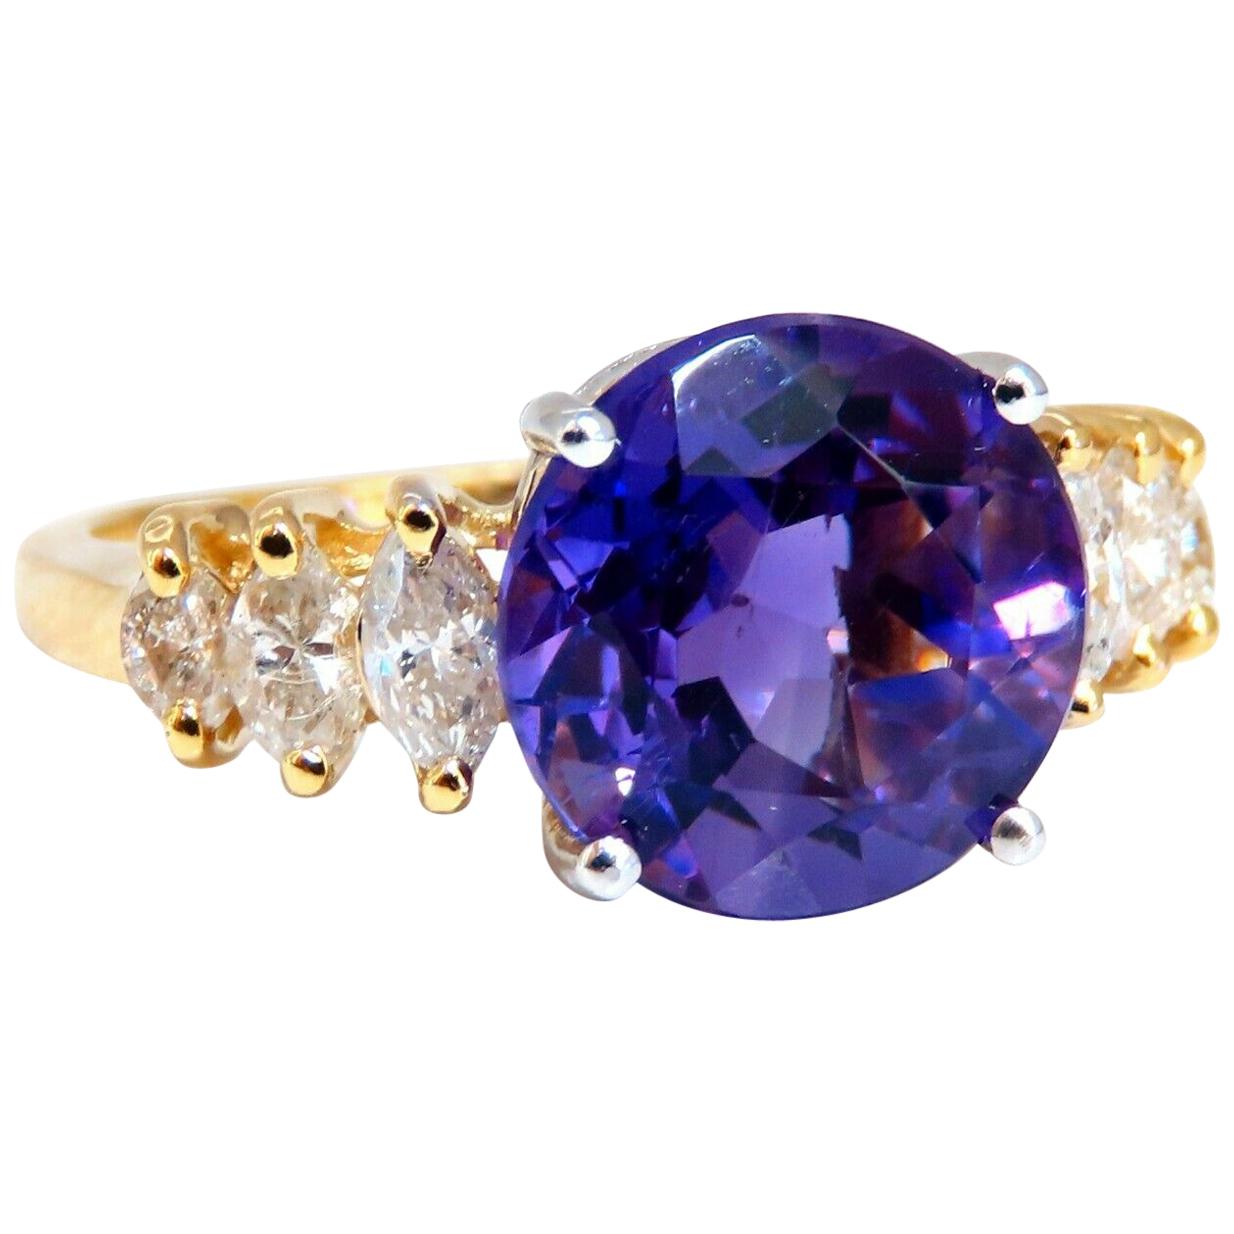 4.45 Carat Natural Round Vivid Purple Amethyst Diamond Ring 14 Karat For Sale